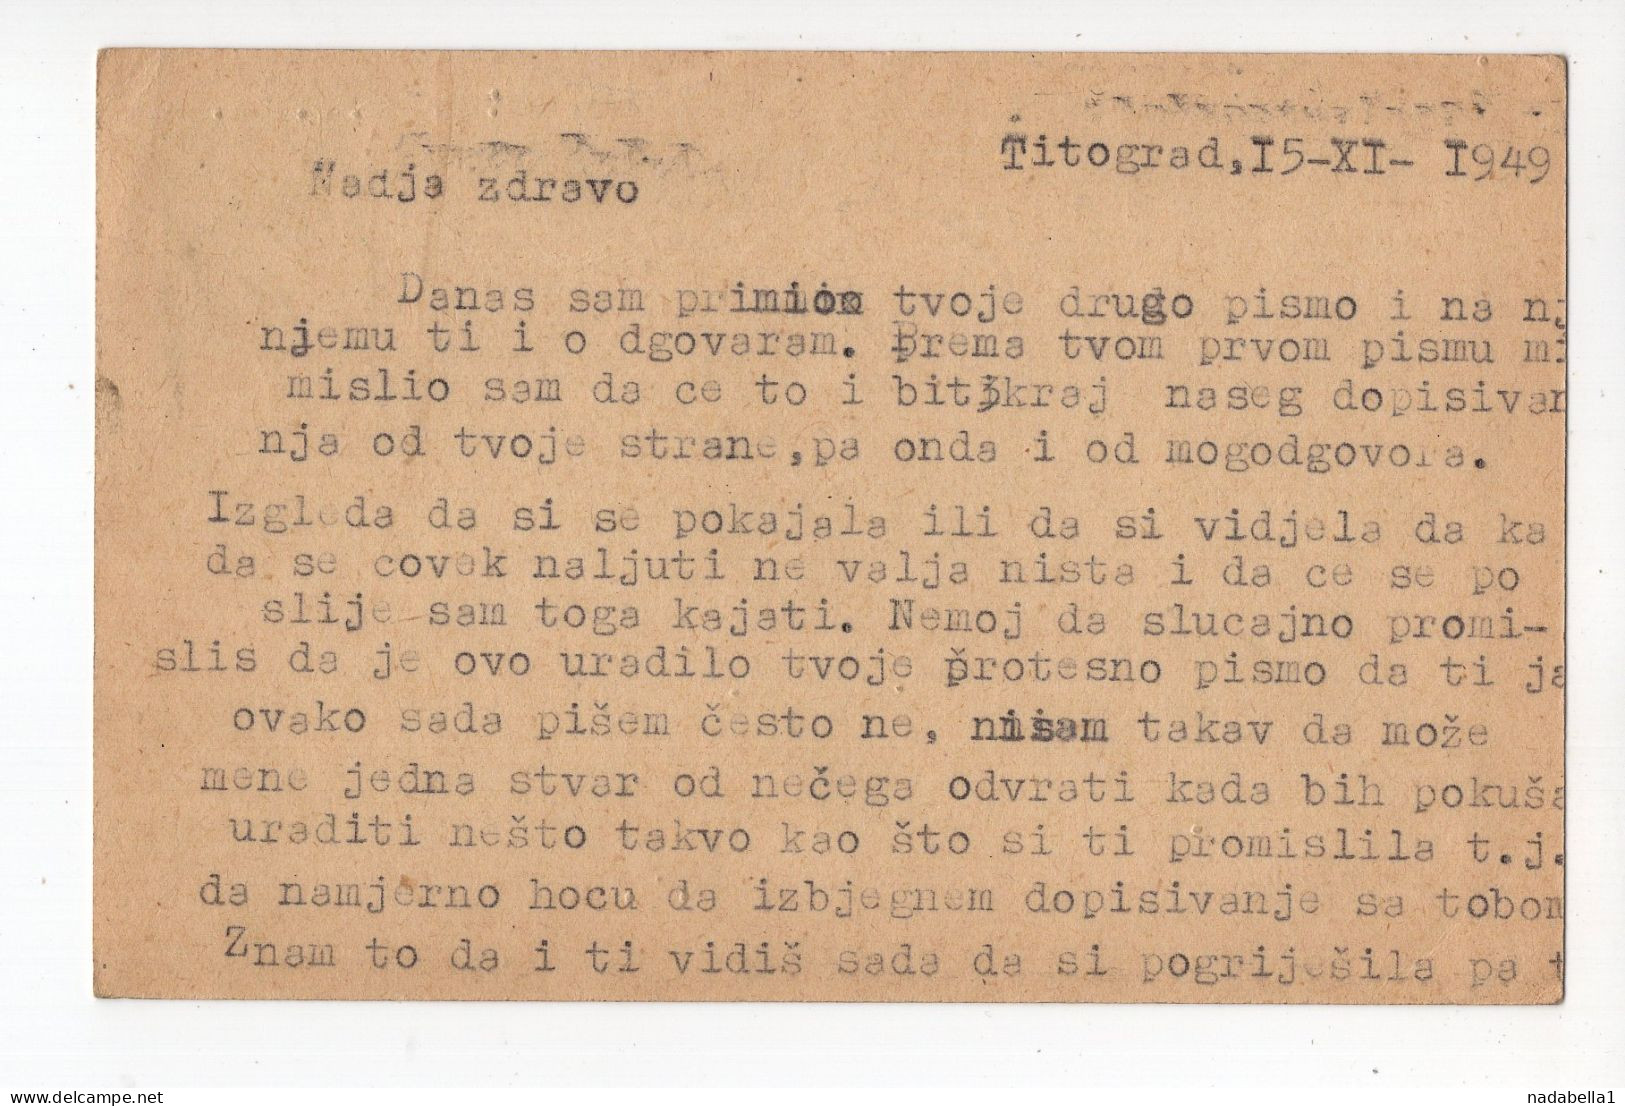 1949. YUGOSLAVIA,MONTENEGRO,TITOGRAD,2 DIN POSTAGE DUE IN BELGRADE,2 DIN STATIONERY CARD,USED - Portomarken